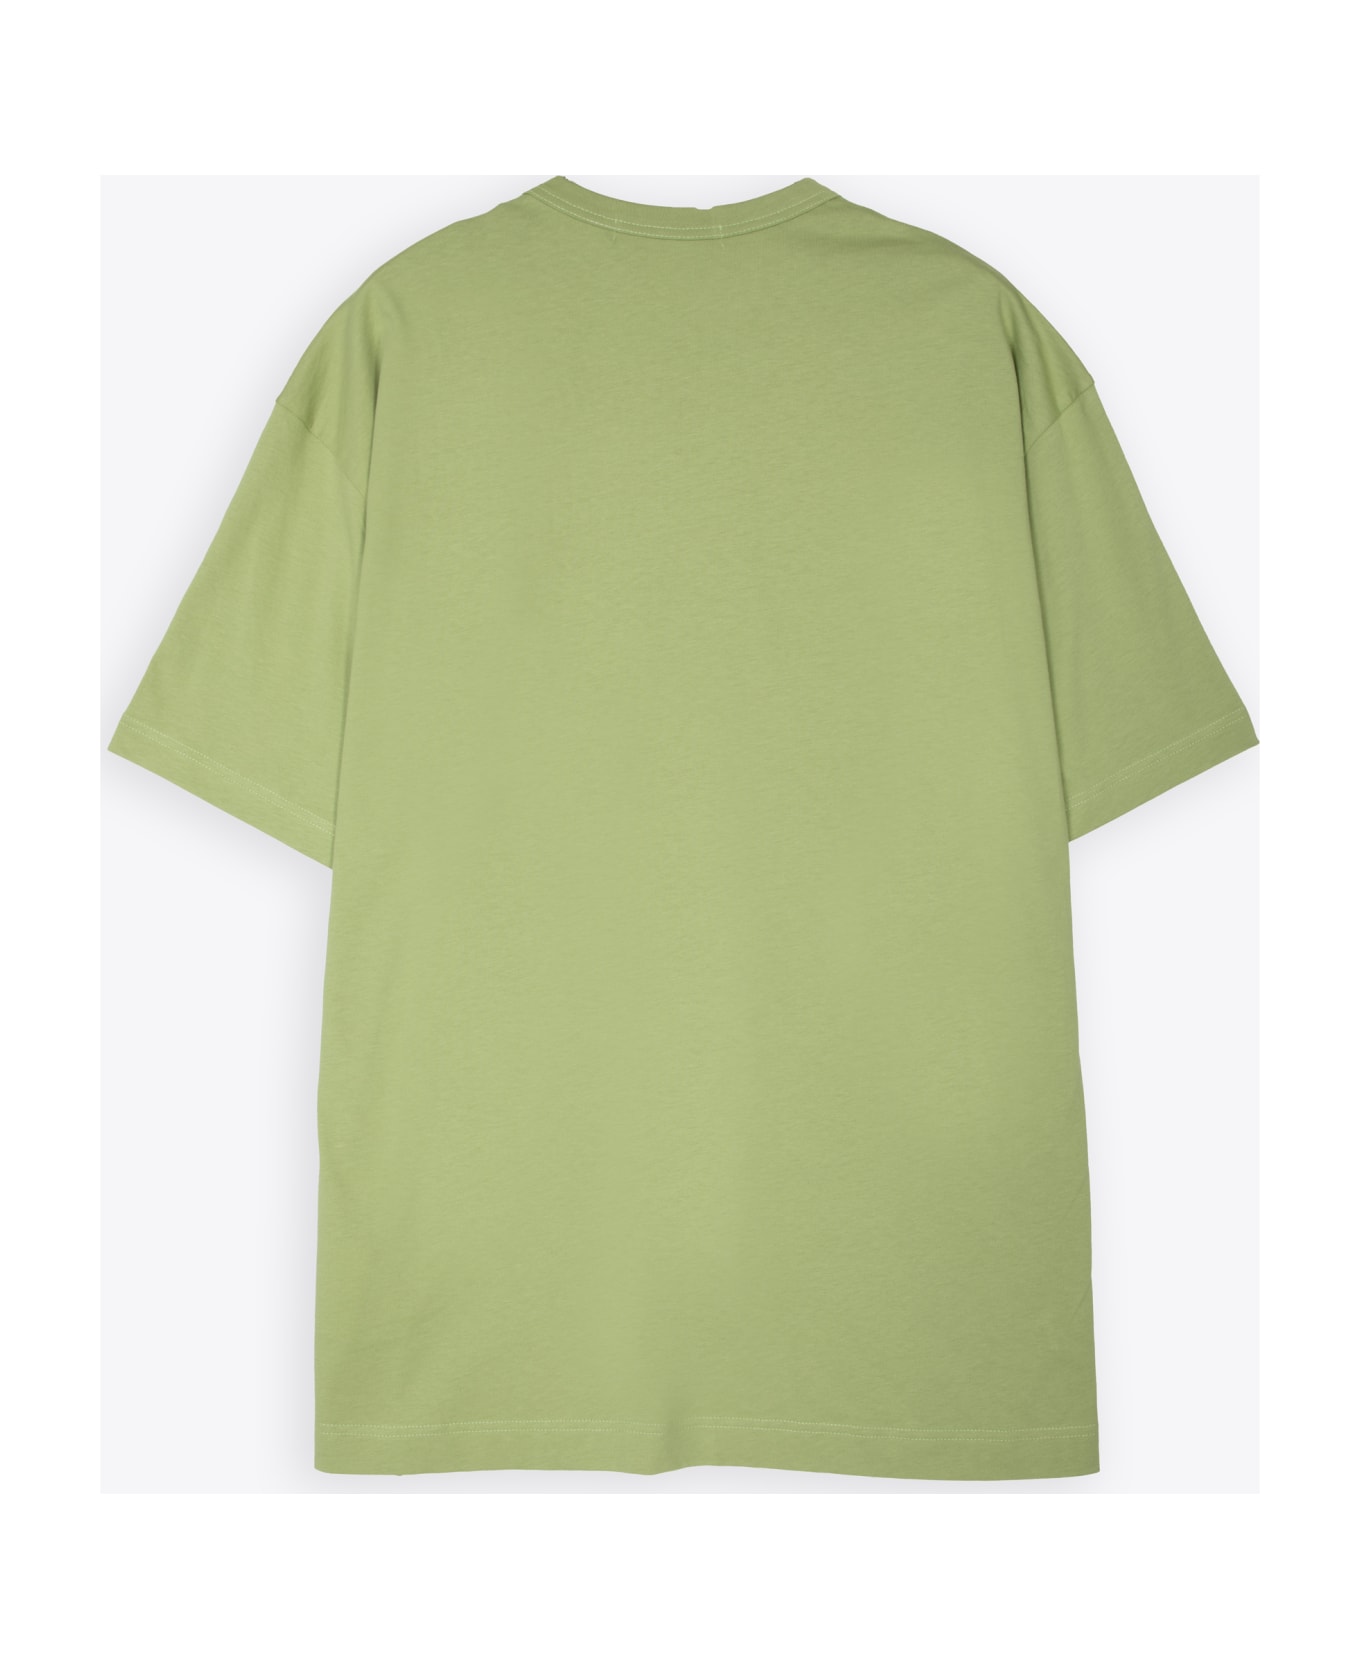 Comme des Garçons Shirt Mens T-shirt Knit Green cotton oversize t-shirt with chest logo - Cachi シャツ